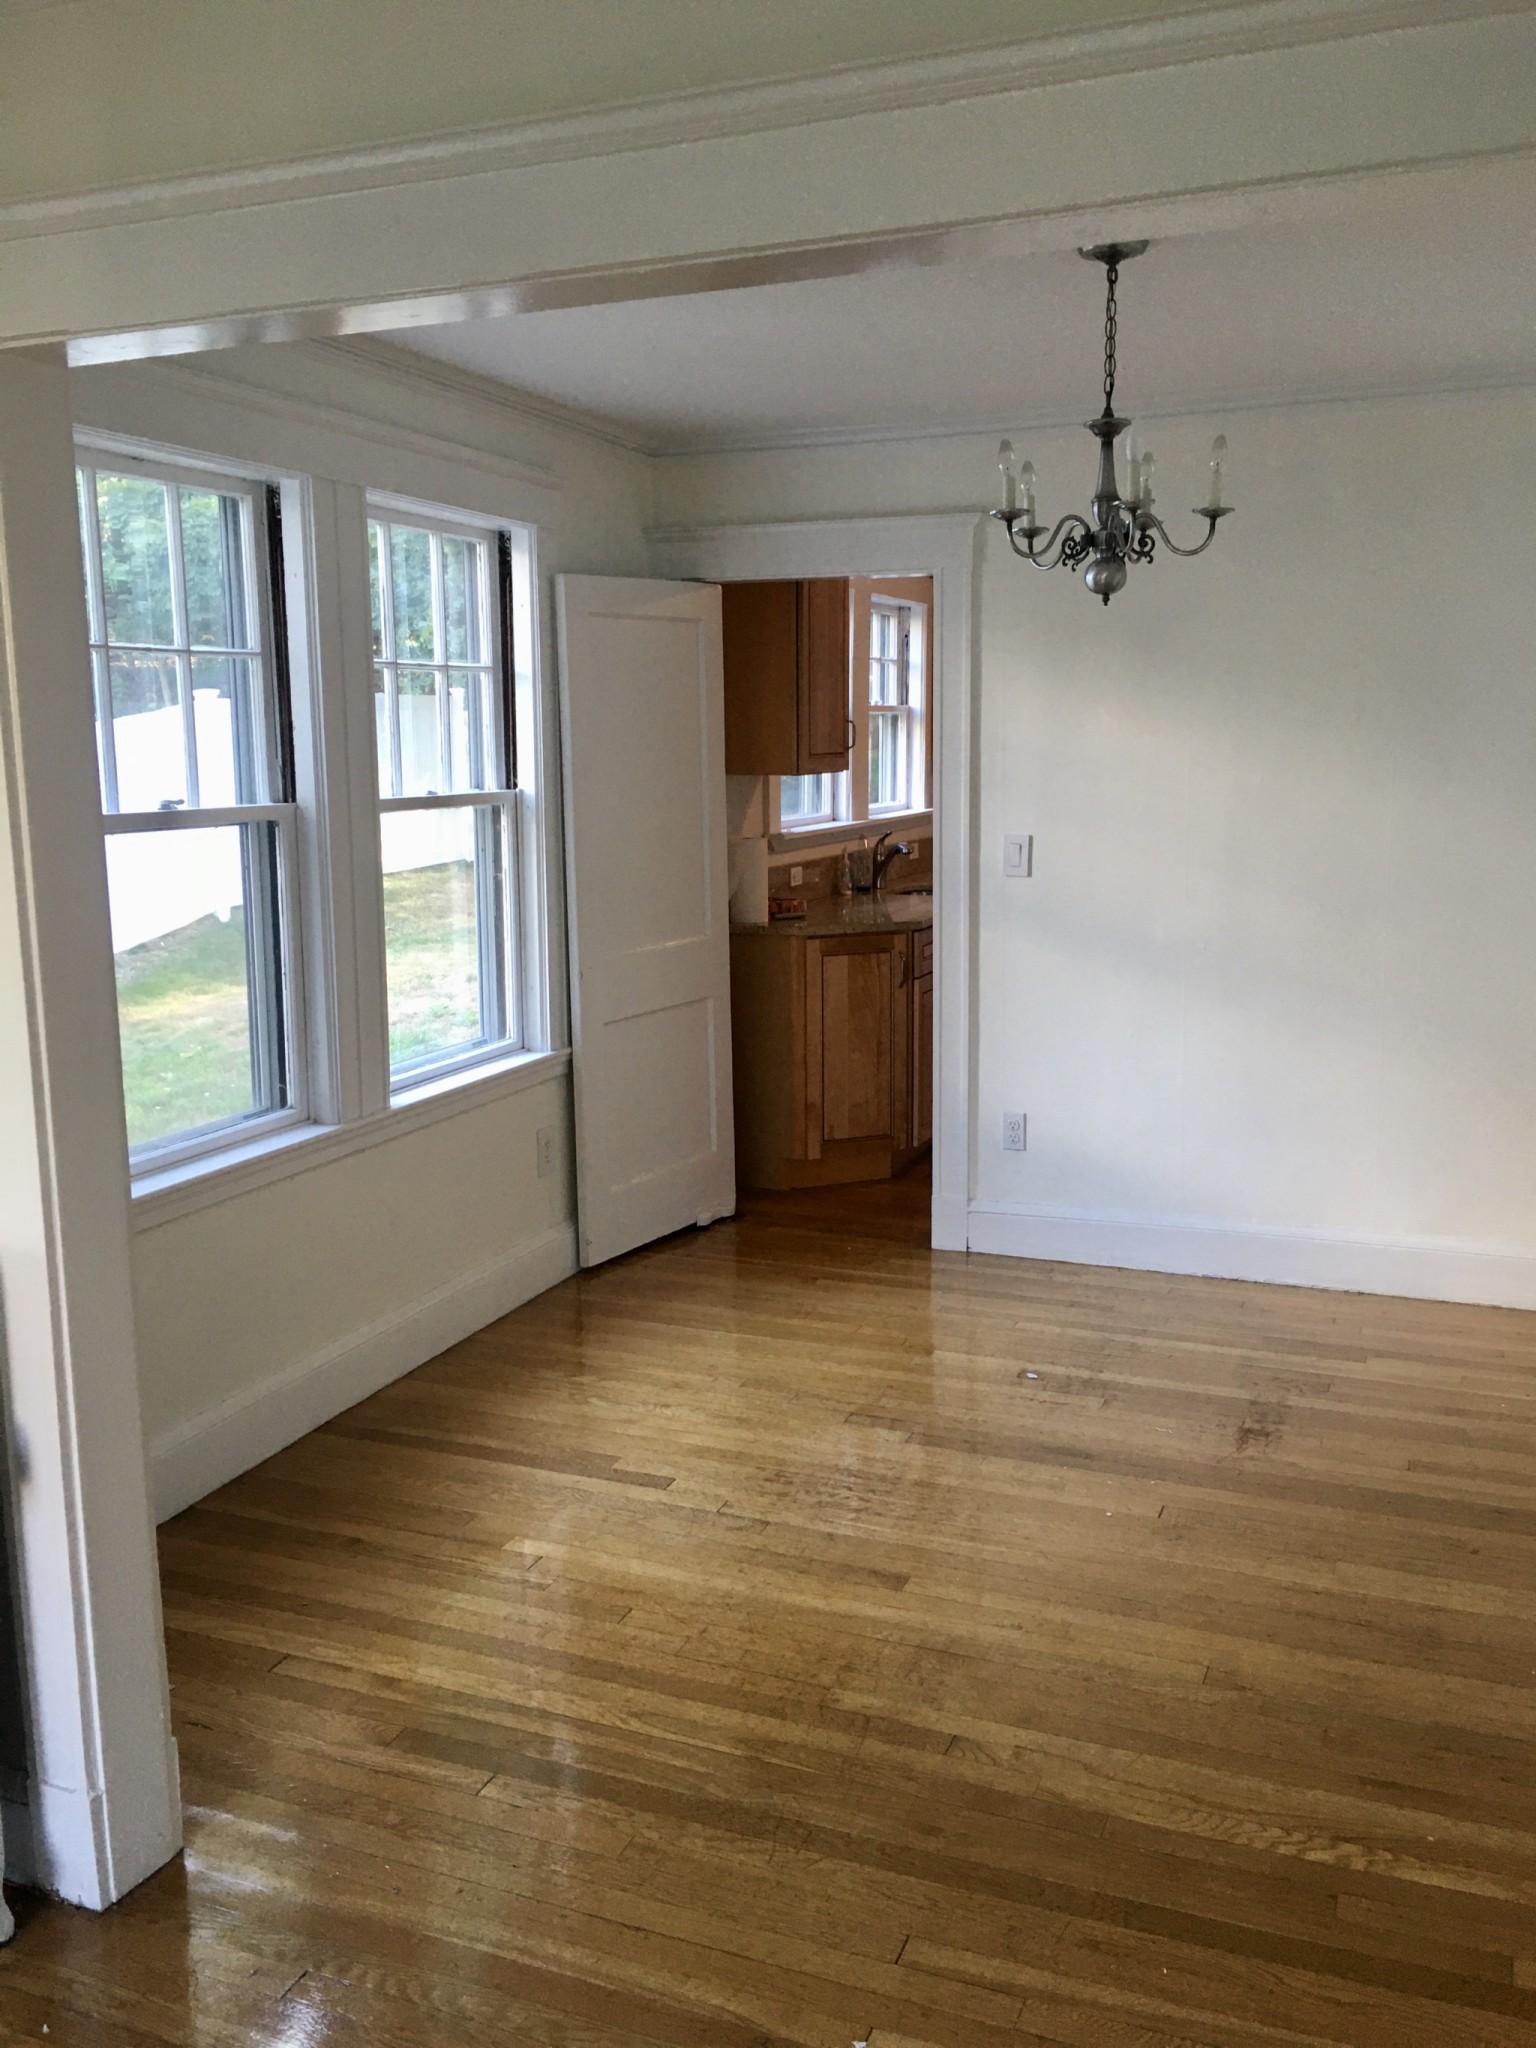 Photos of apartment on Langley Rd.,Newton MA 02459